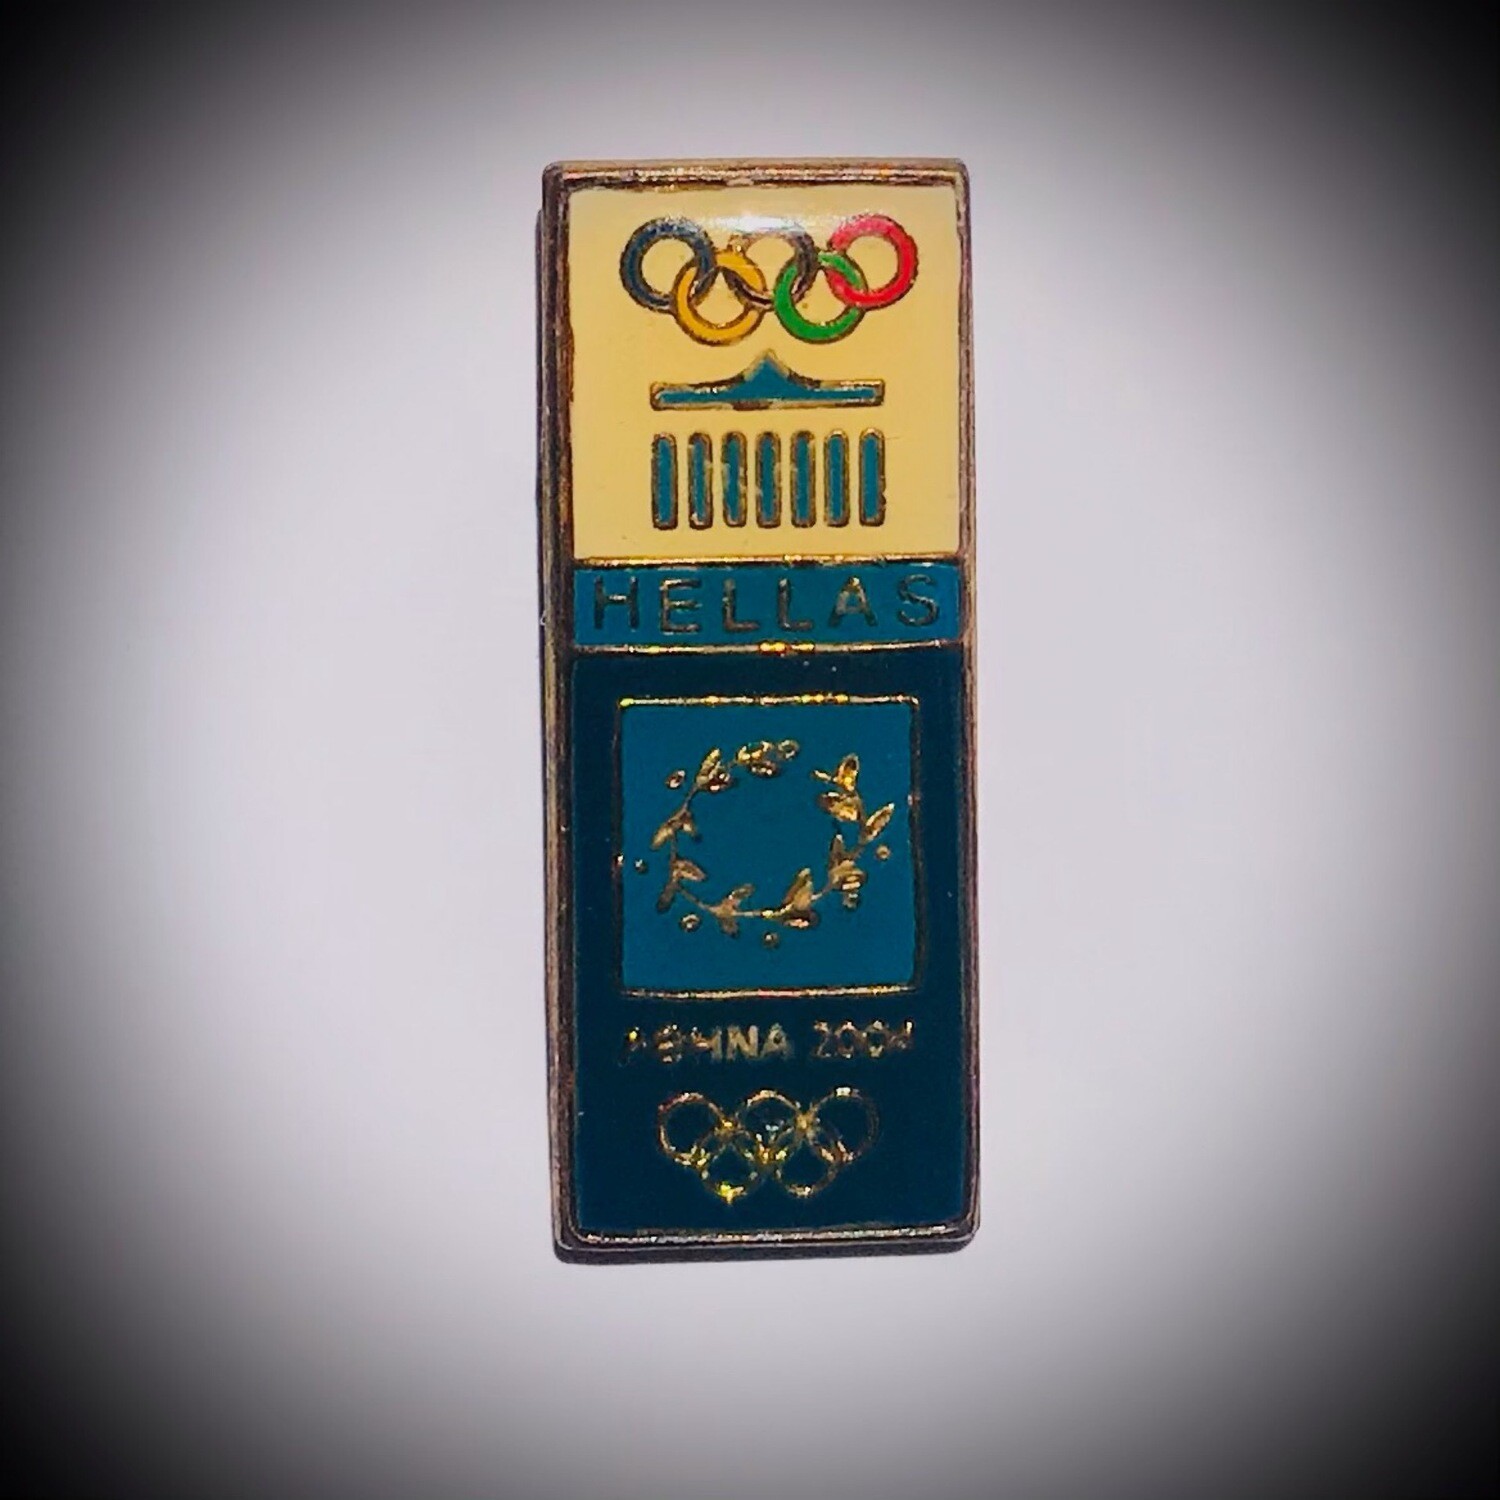 Athens 2004 olympic games pin badge BP039